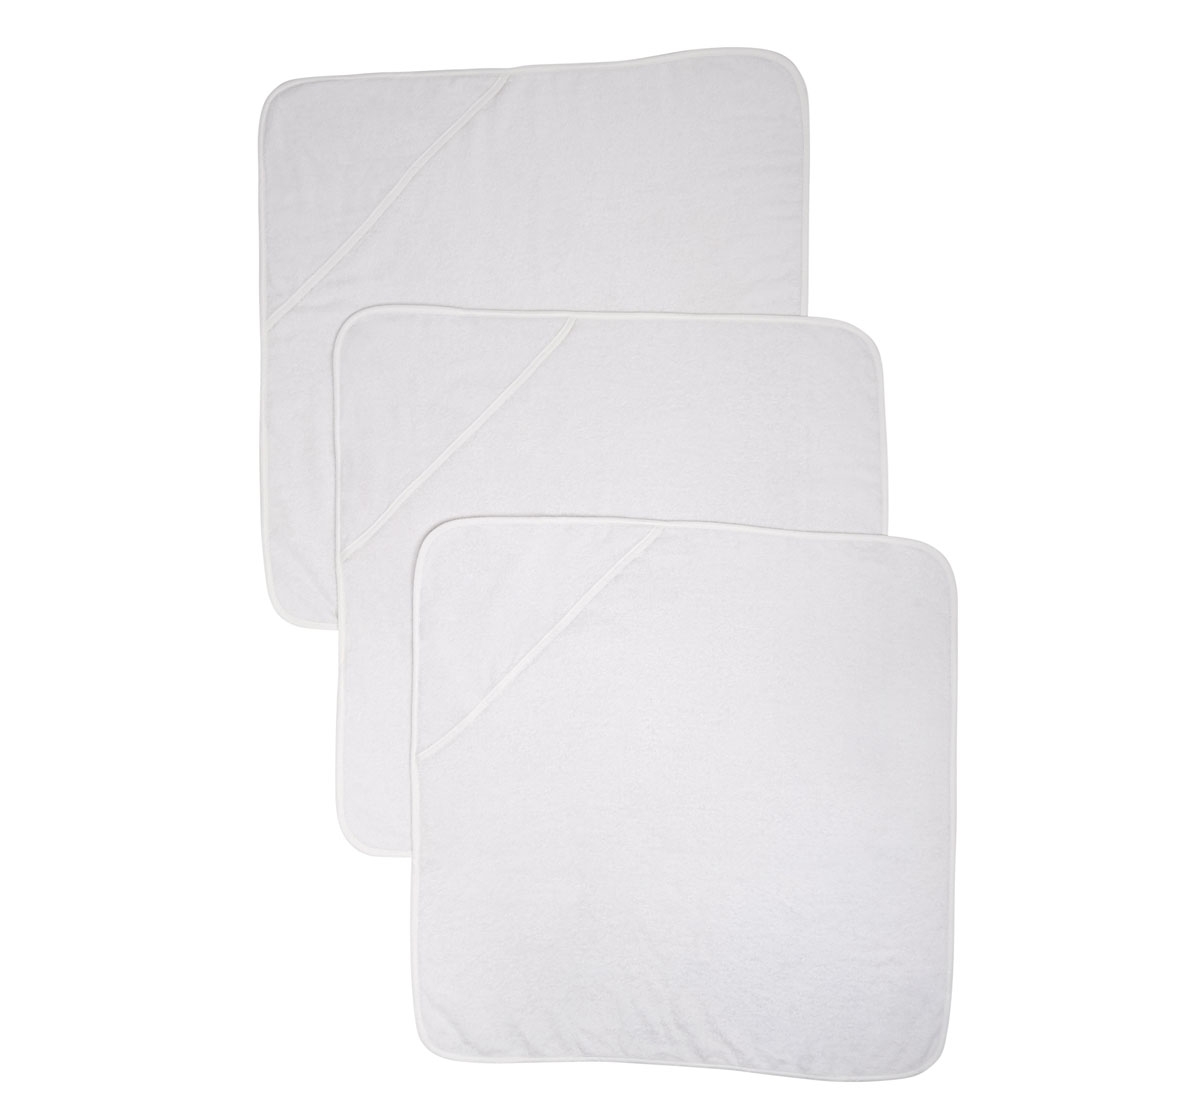 Cuddle 'N' Dry Hooded Towels - White - Pack of 3